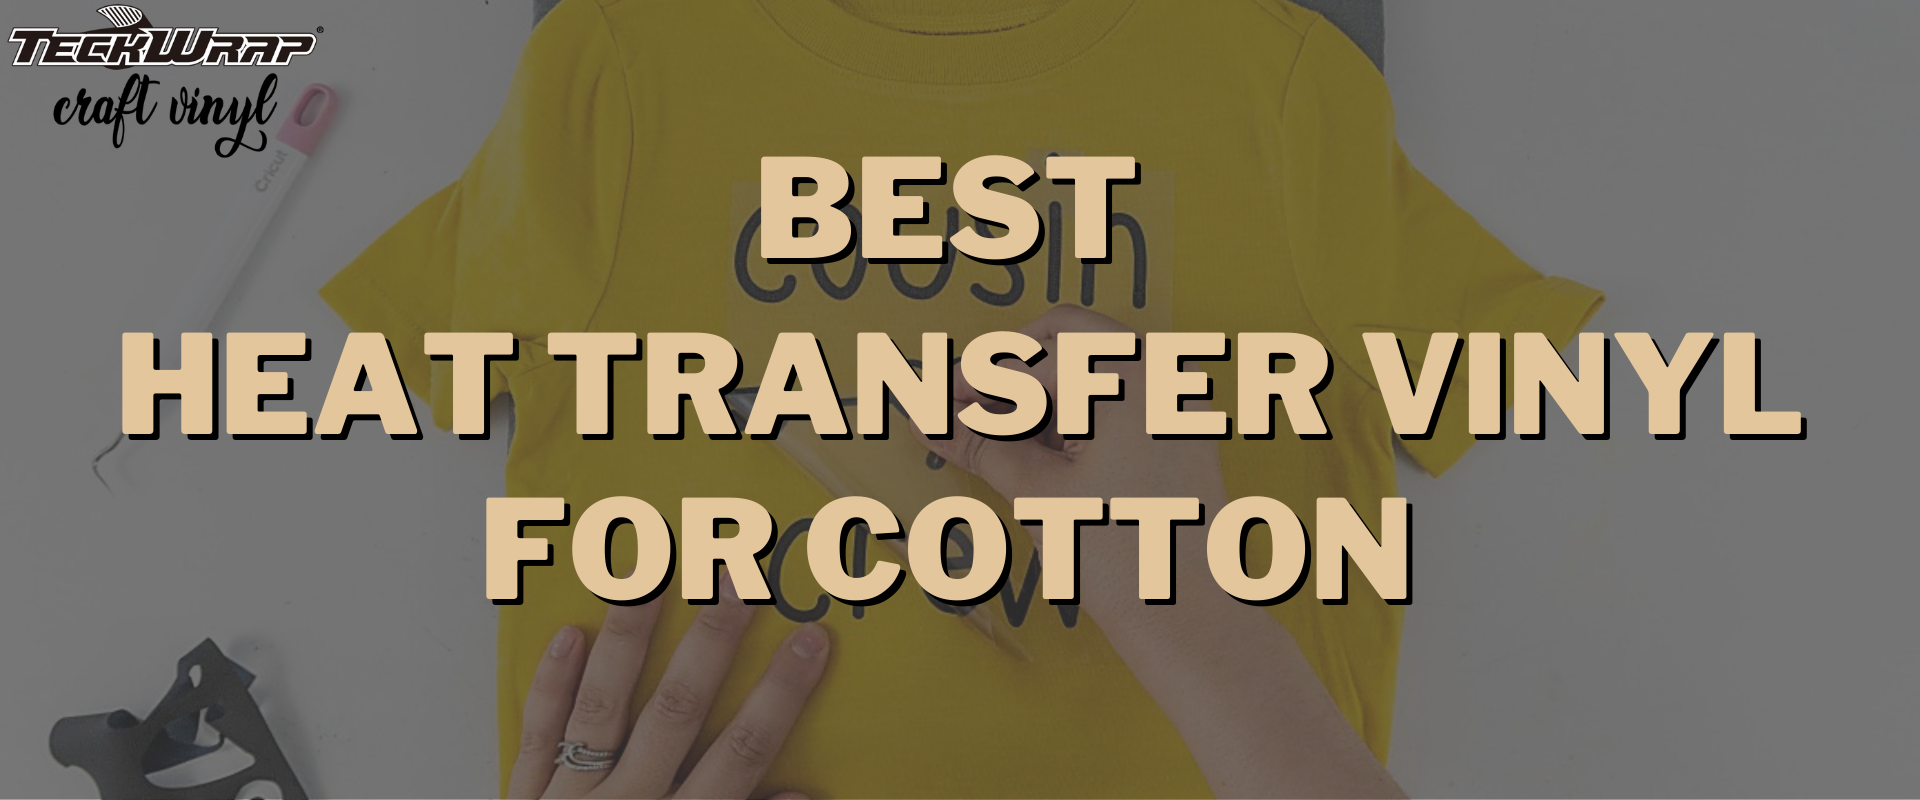 Best Heat Transfer Vinyl For Cotton  Best Heat Transfer Vinyl For Cotton  